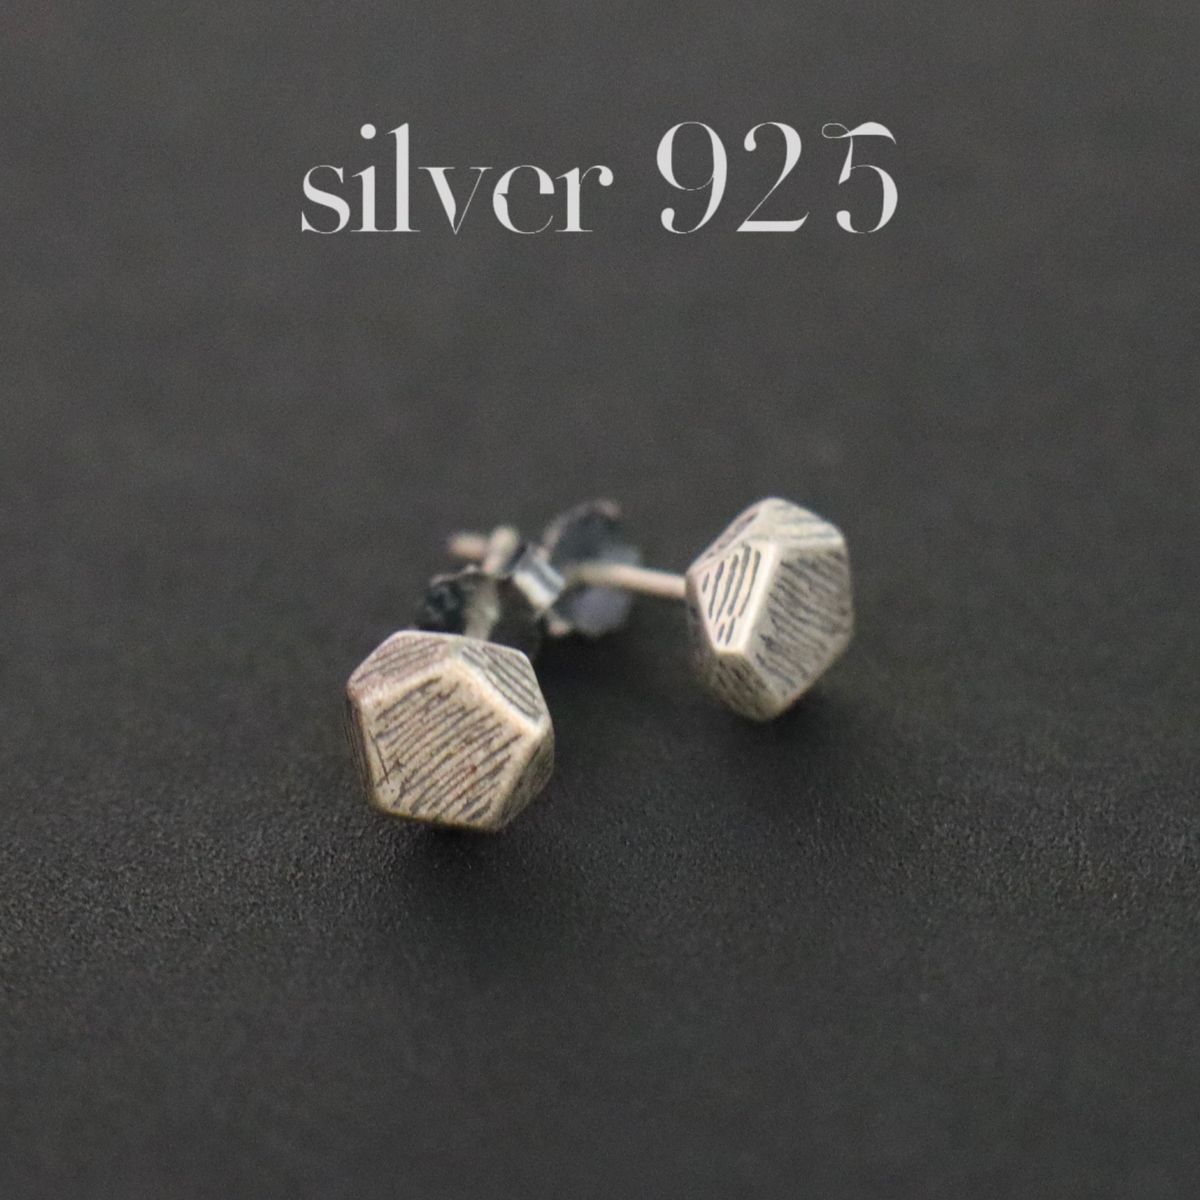 silver925銀素材 スタッドピアス シンプル おしゃれ 男女兼用 片耳可 